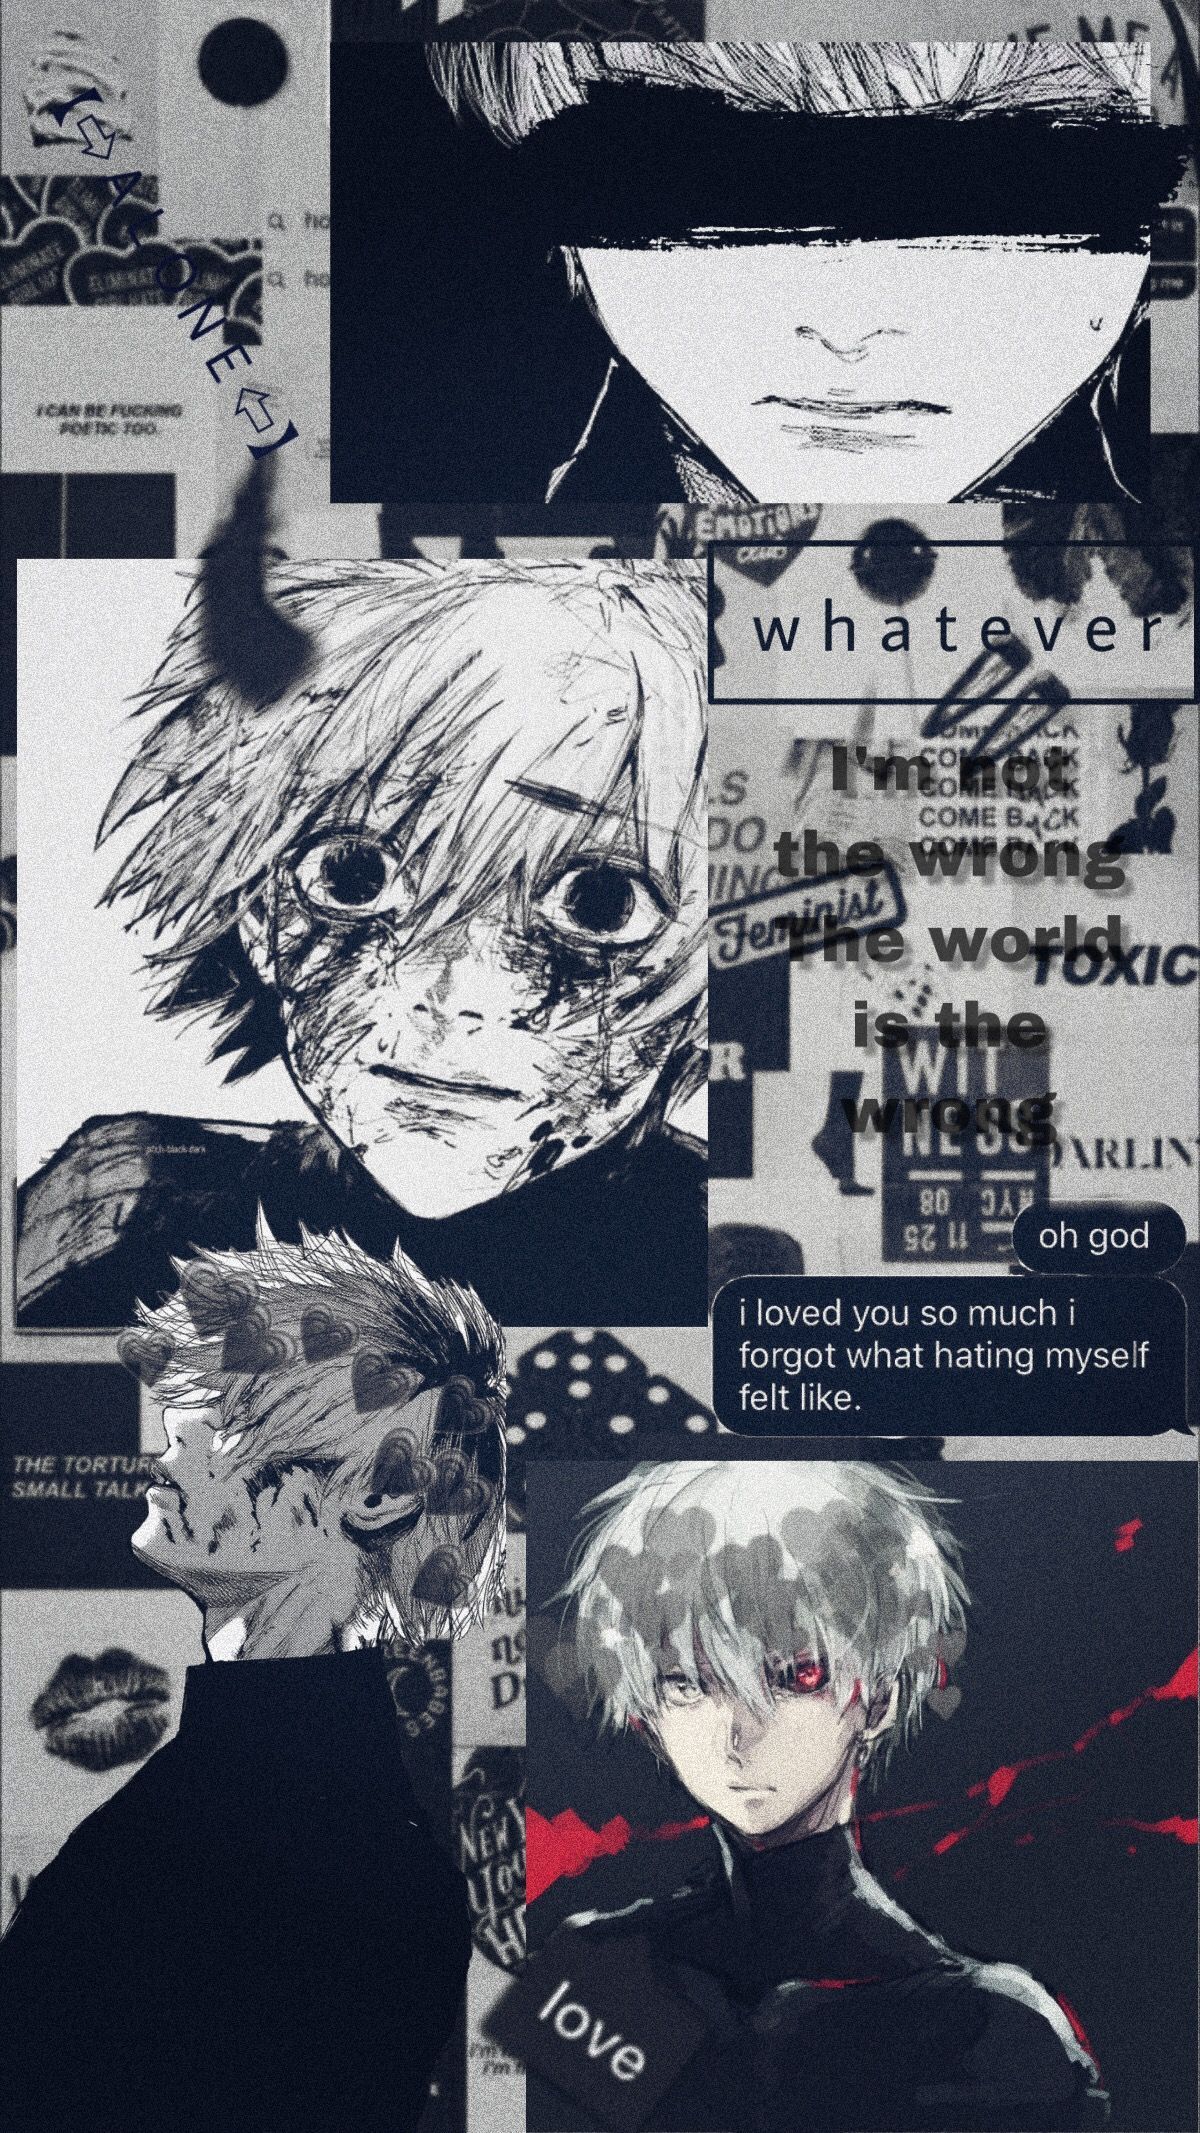 Best Tokyo Ghoul Wallpaper image in 2020